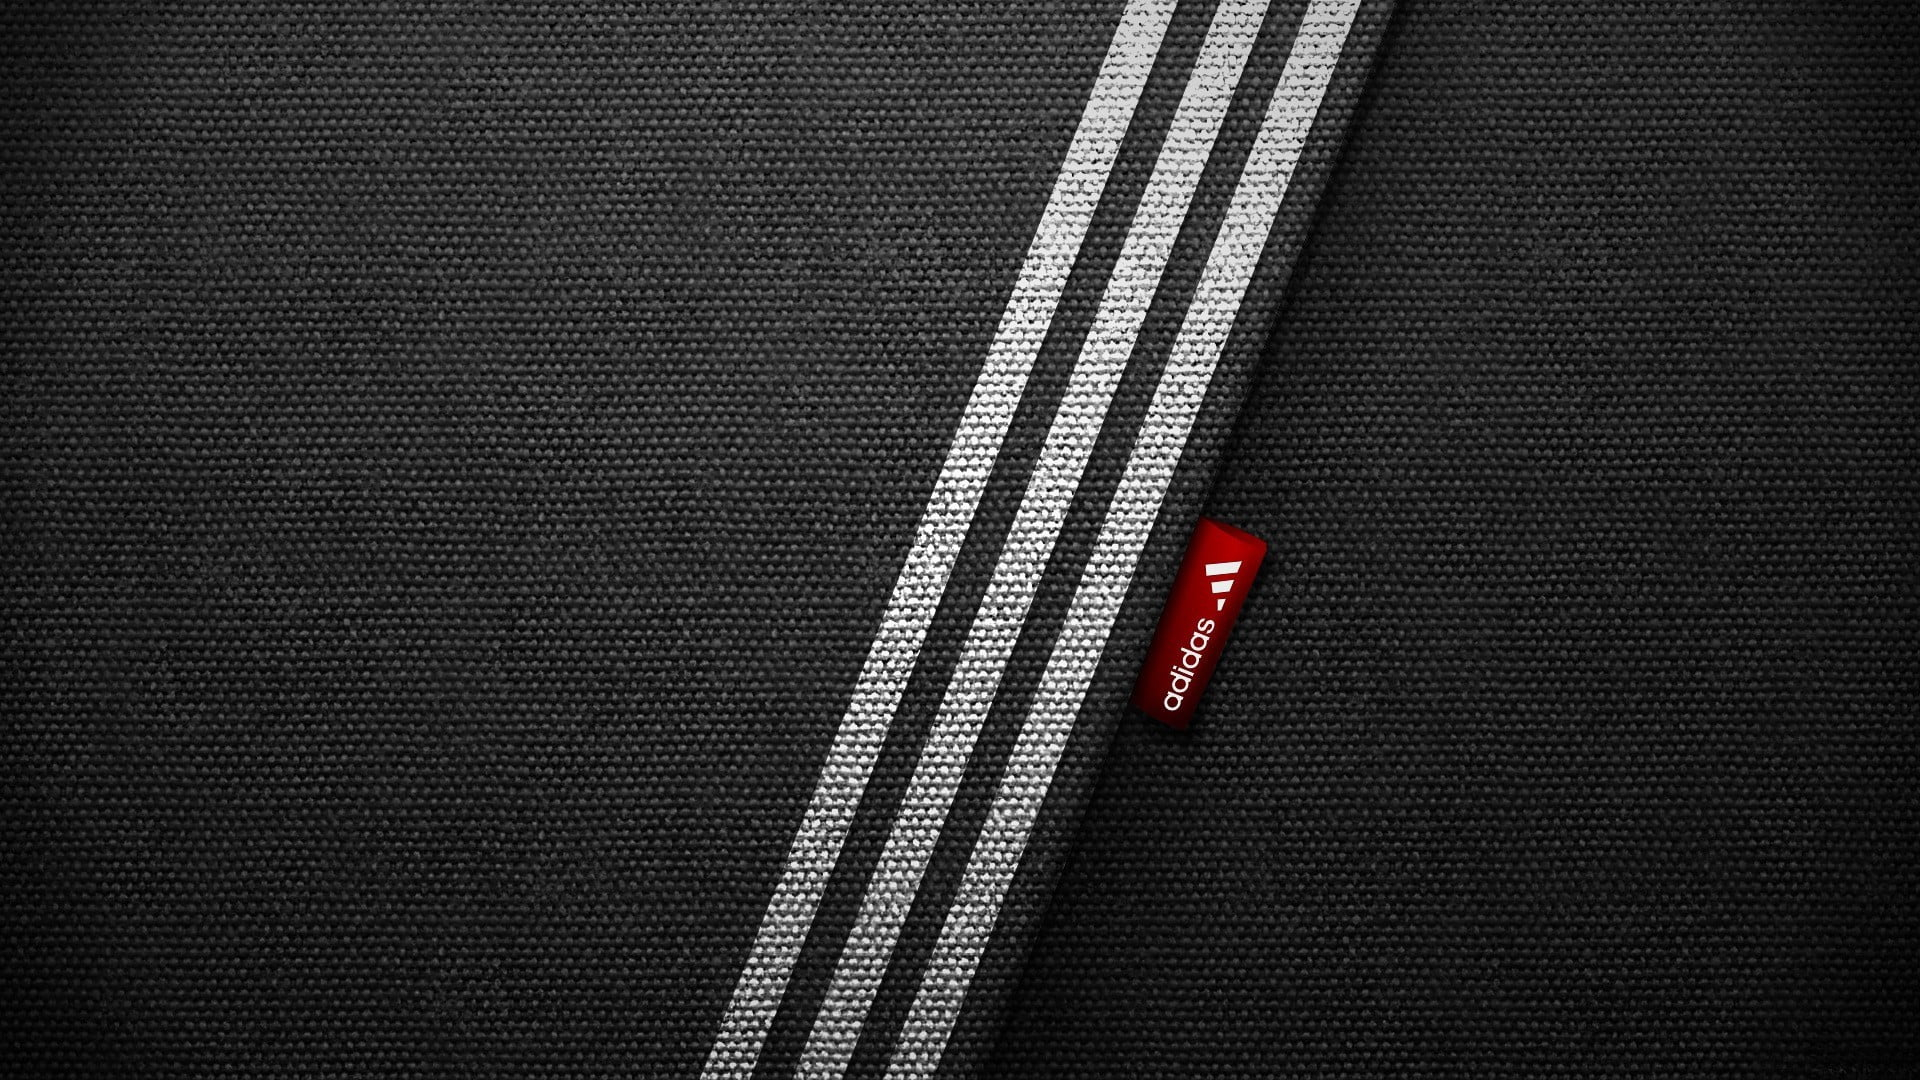 Adidas product label wallpaper, black background, minimalism, red, close-up, adidas product label, Empty